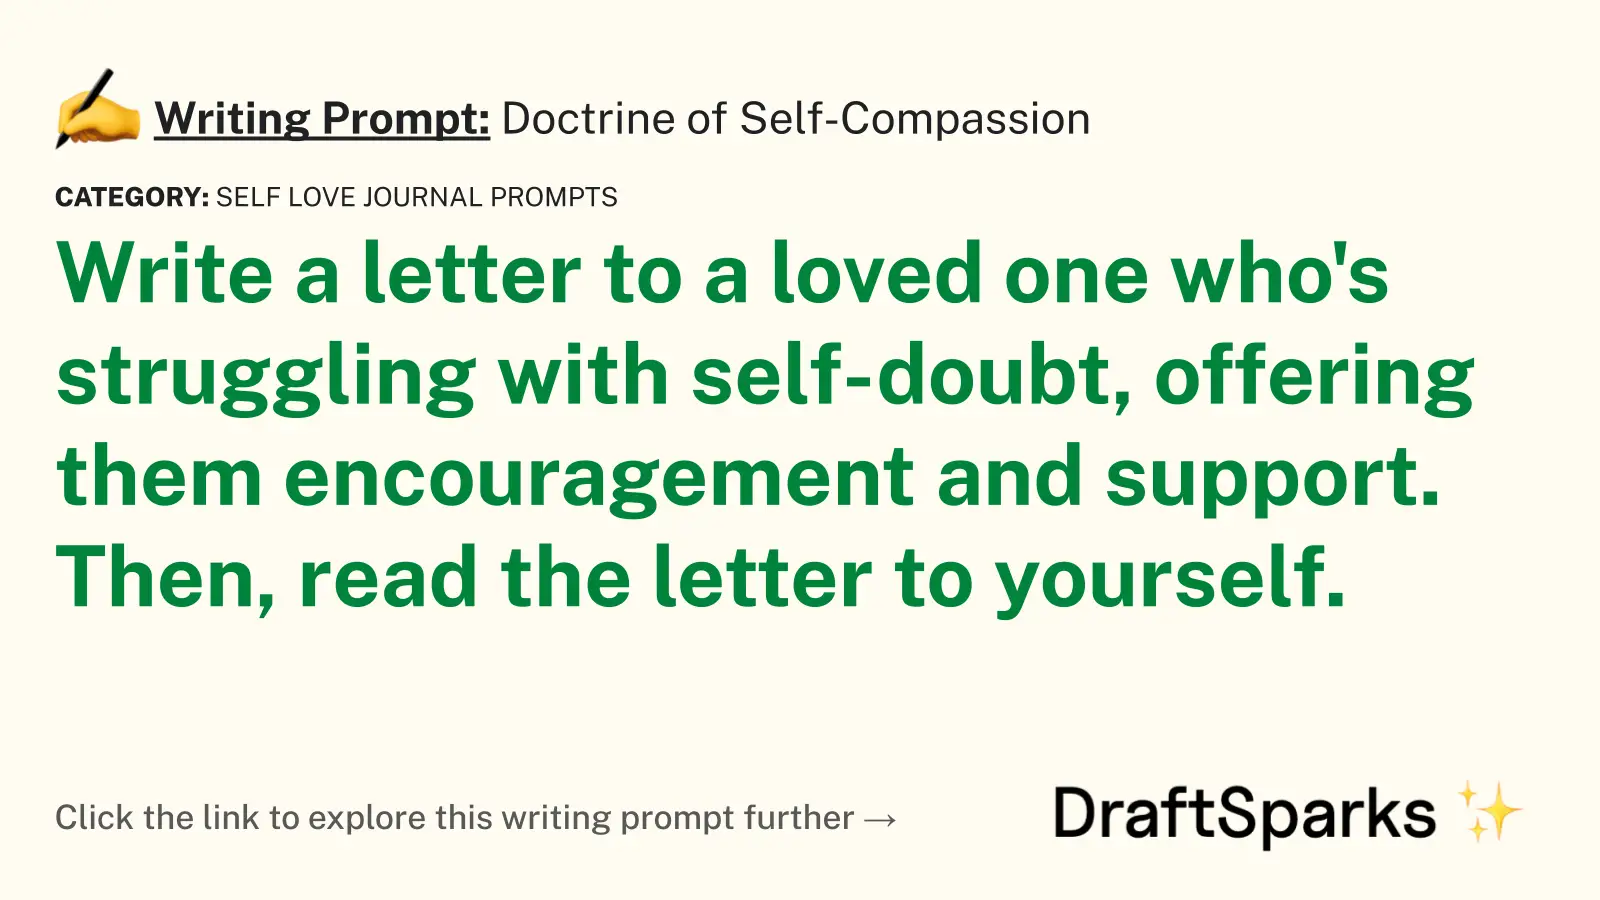 Doctrine of Self-Compassion